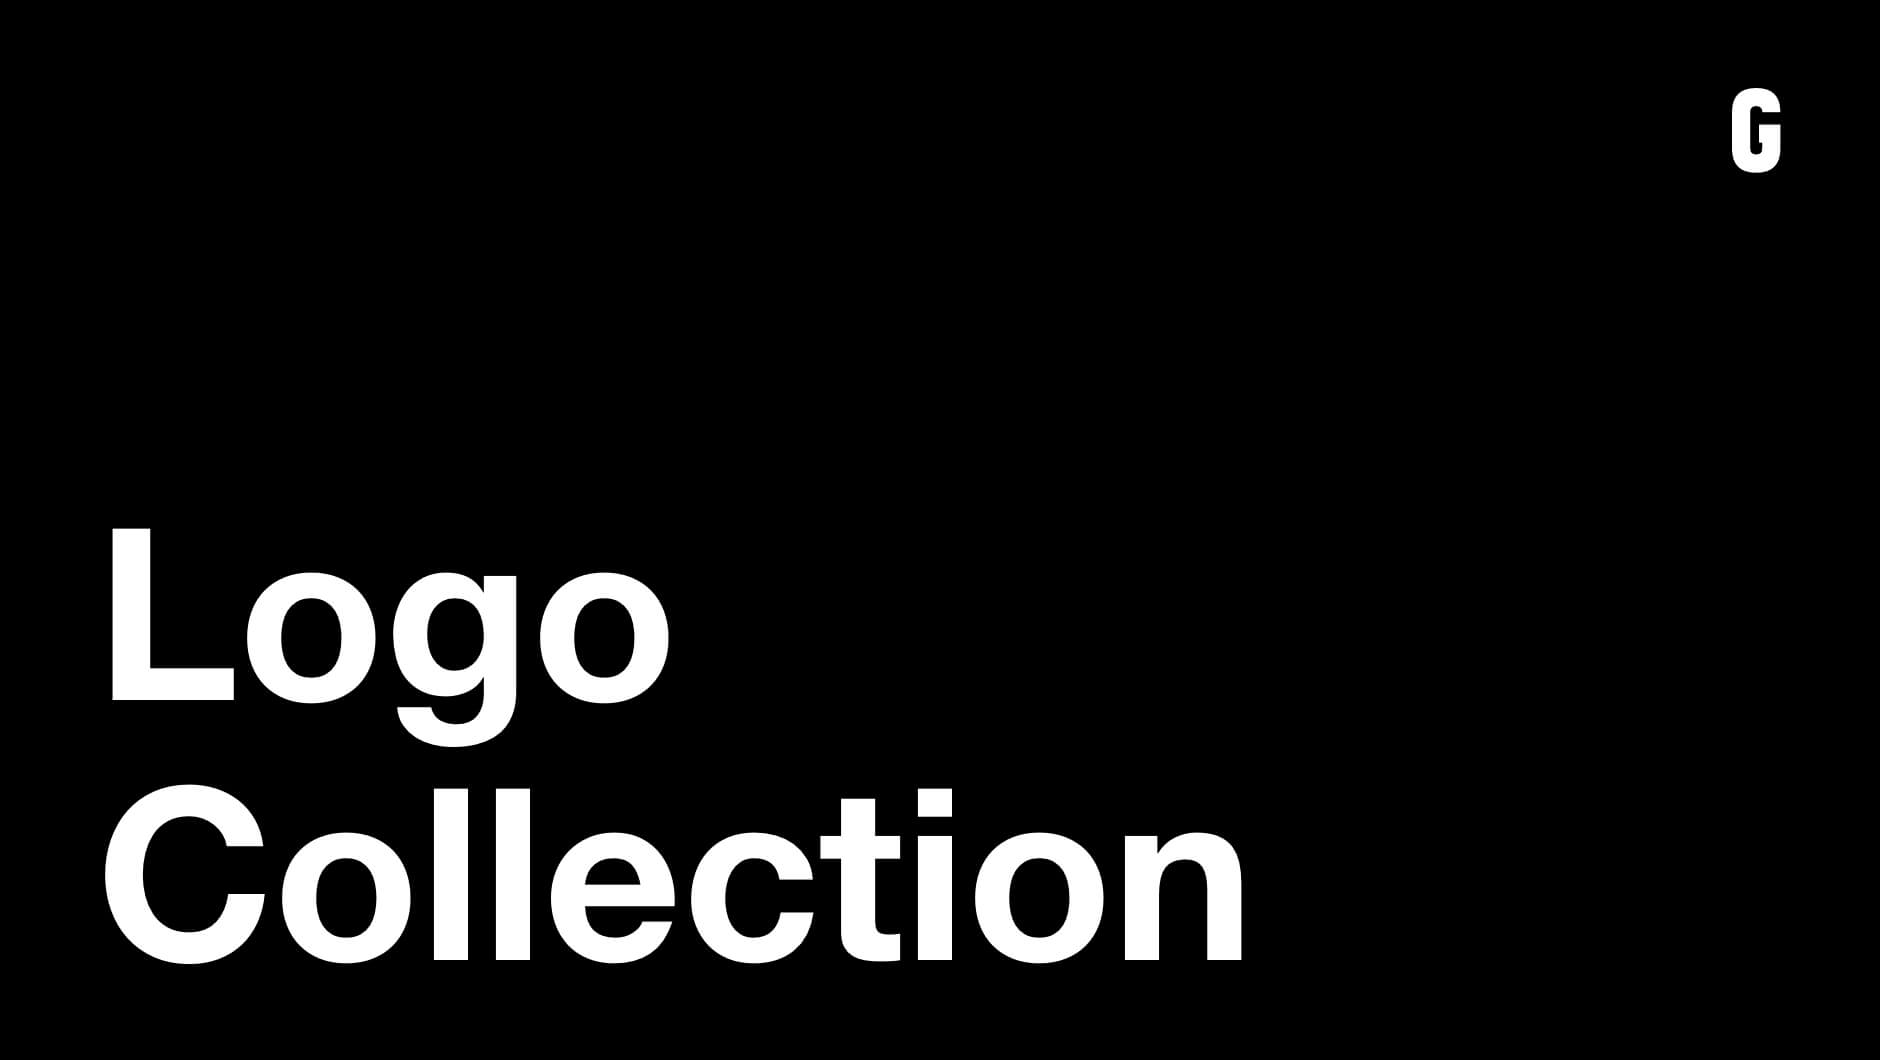 Geyst Logo Collection.